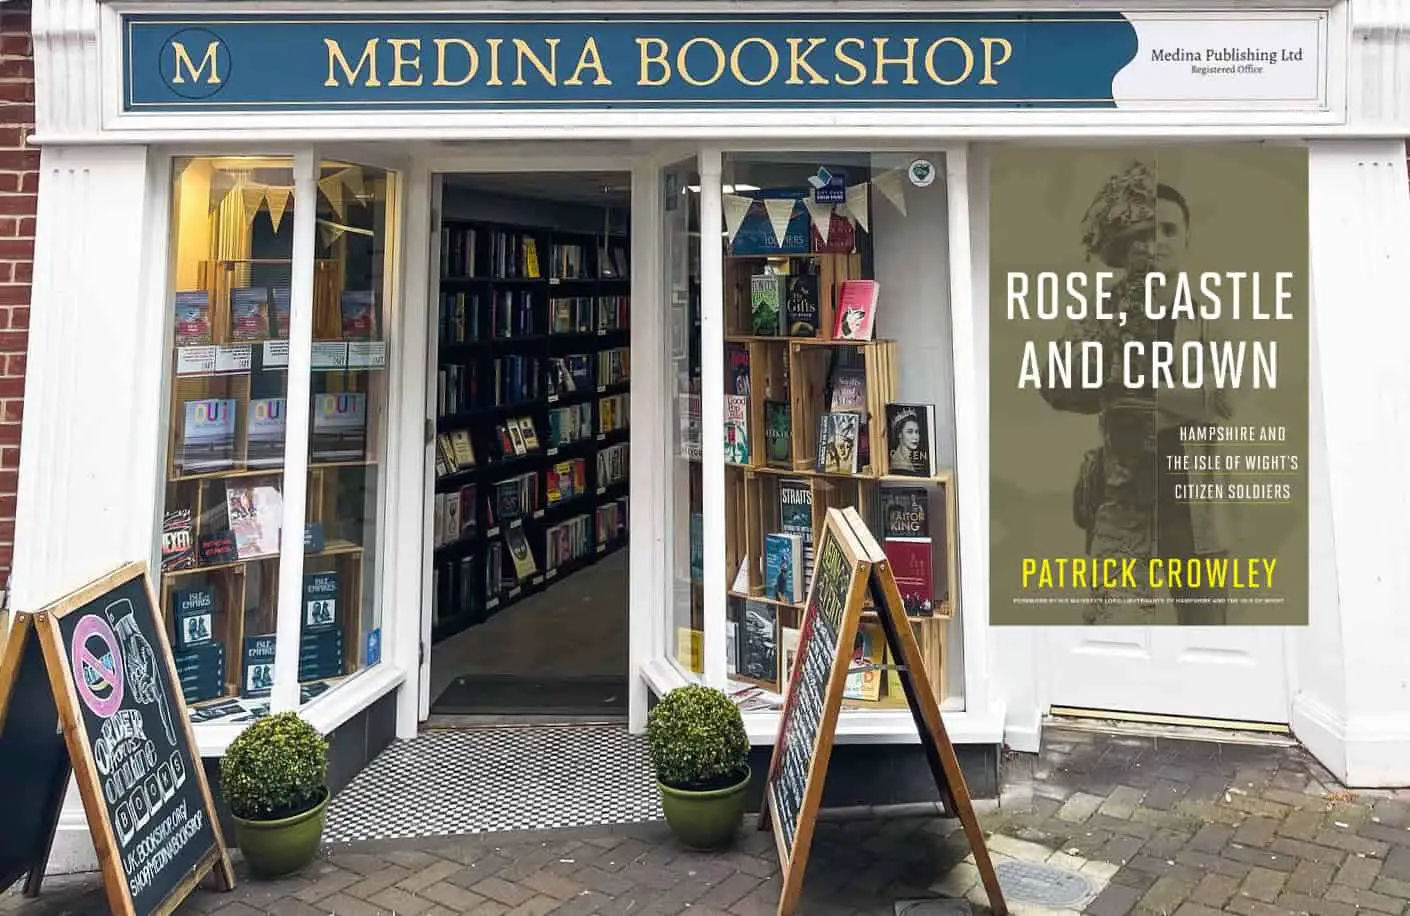 Medina bookshop and Patrick Crowley book cover